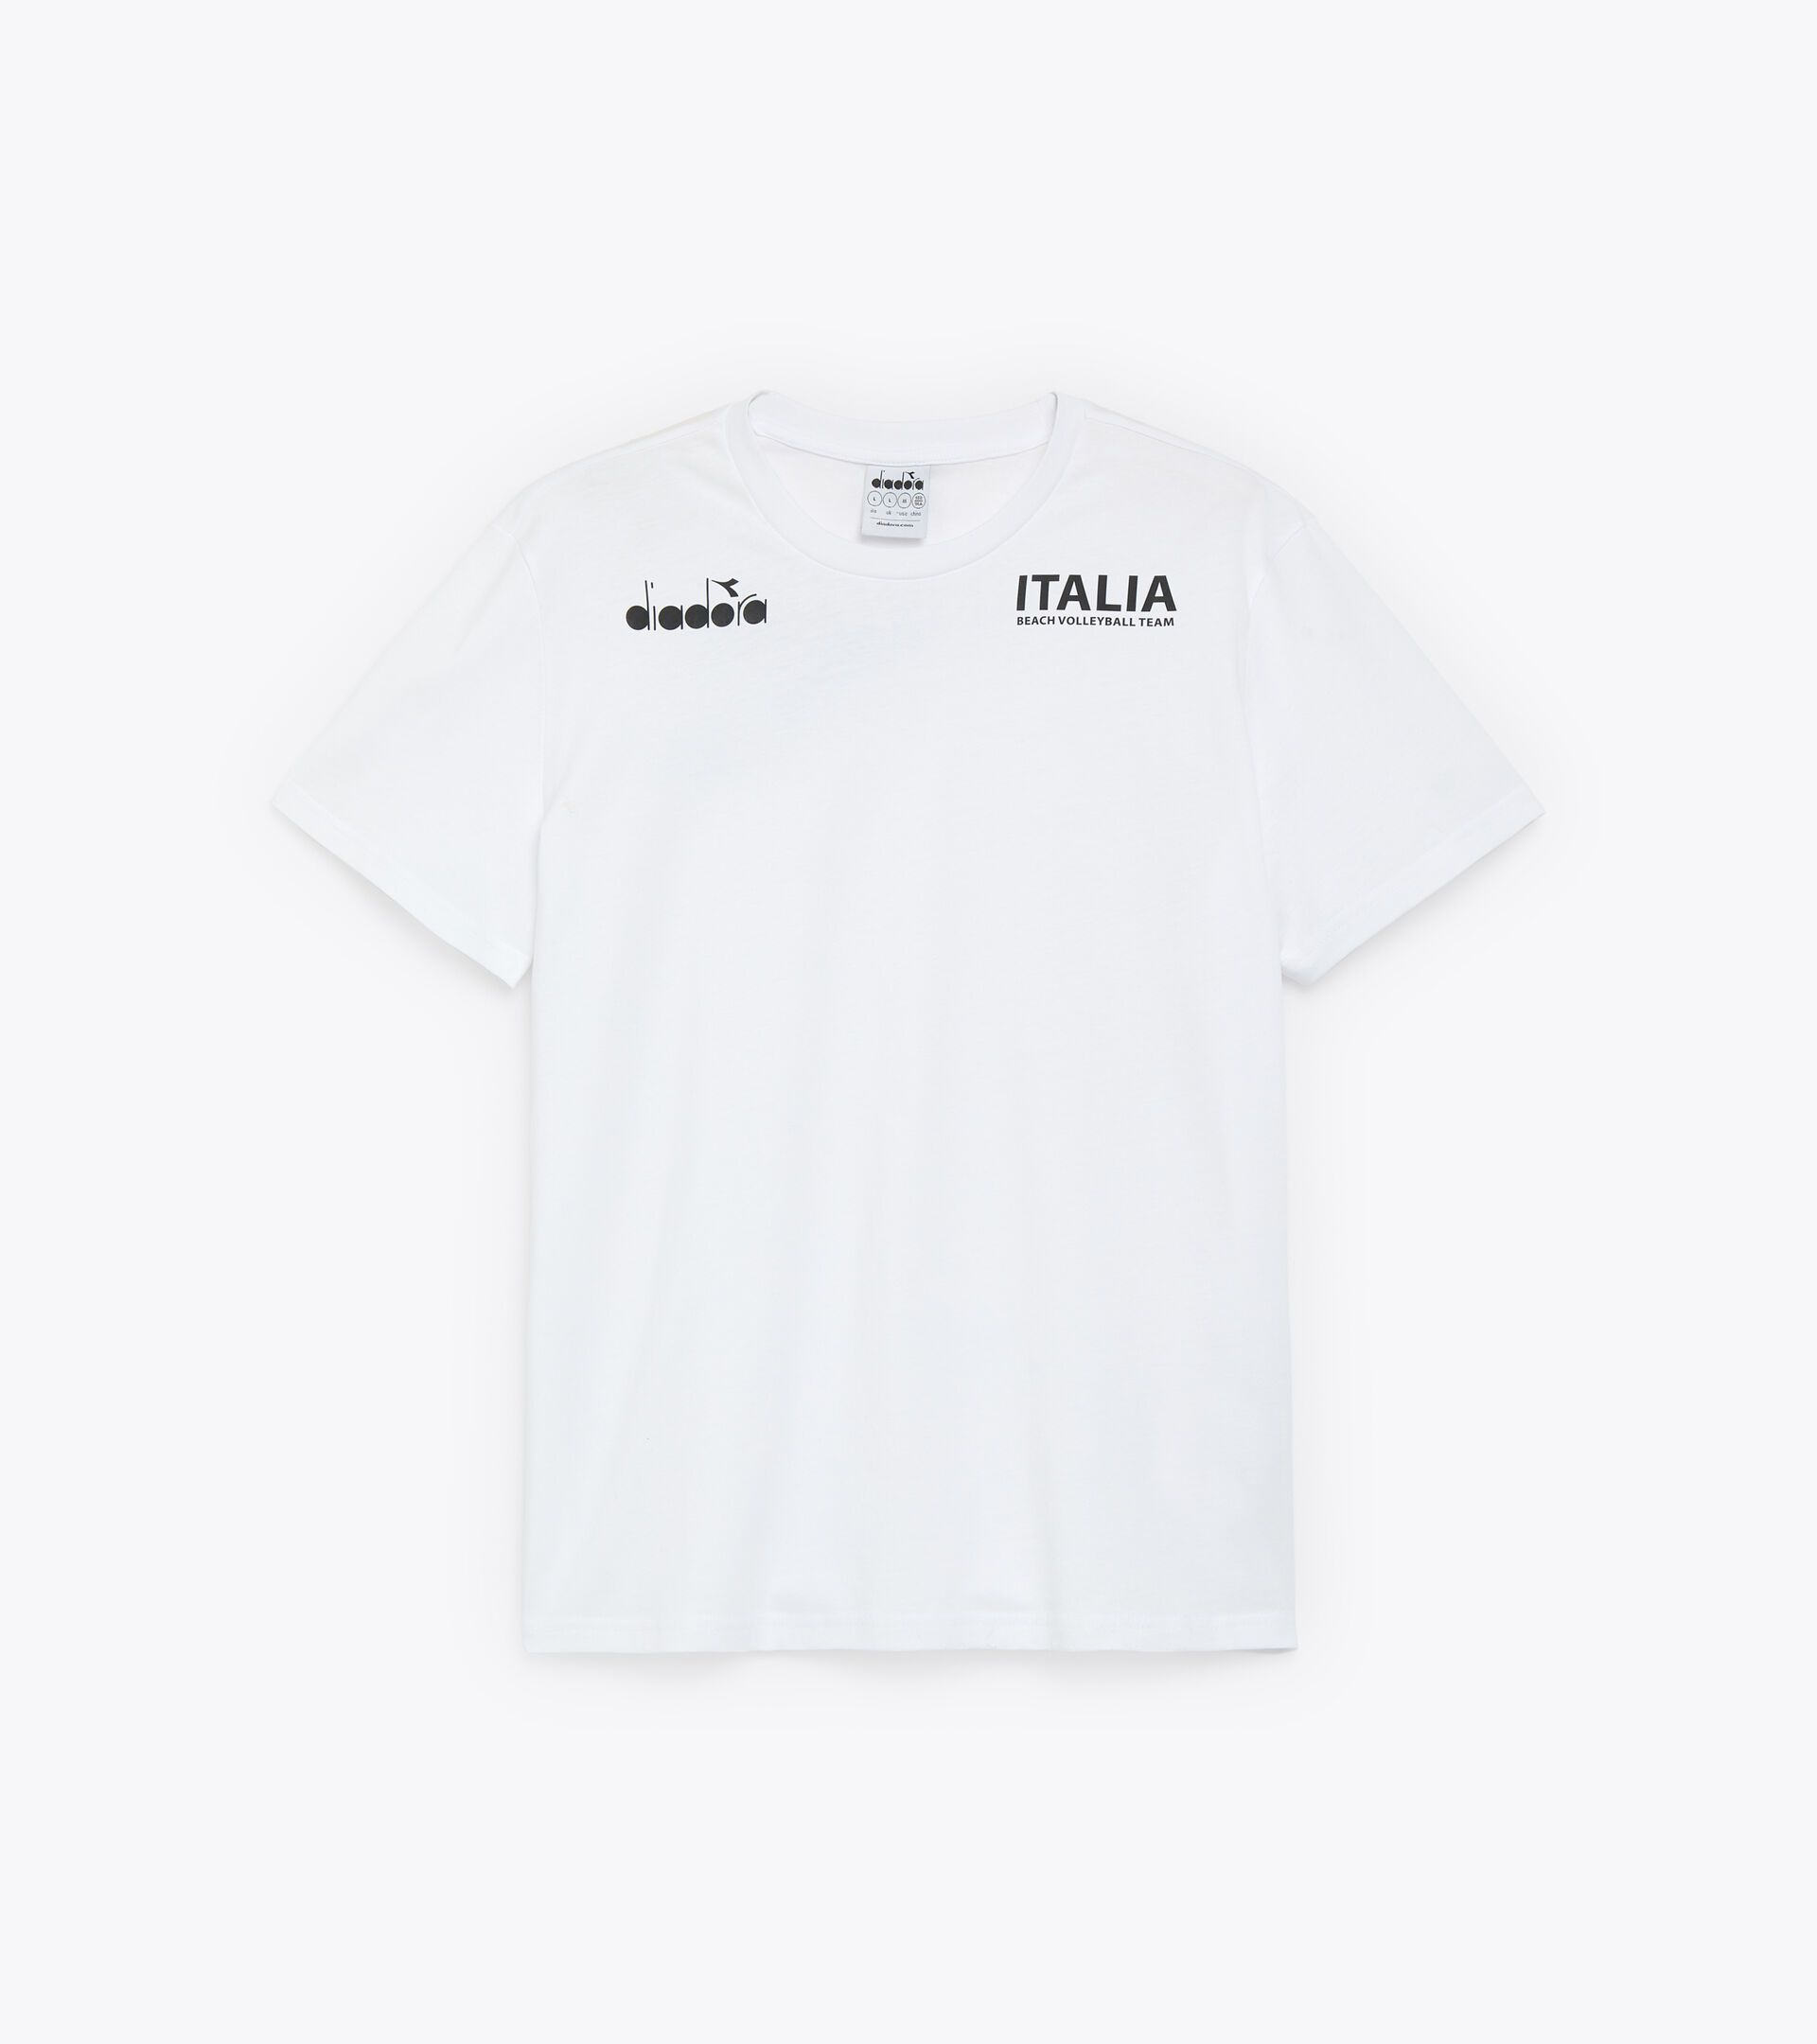 Representative t-shirt - Italy National Volleyball Team T-SHIRT RAPPRESENTANZA BV23 ITALIA OPTICAL WHITE - Diadora